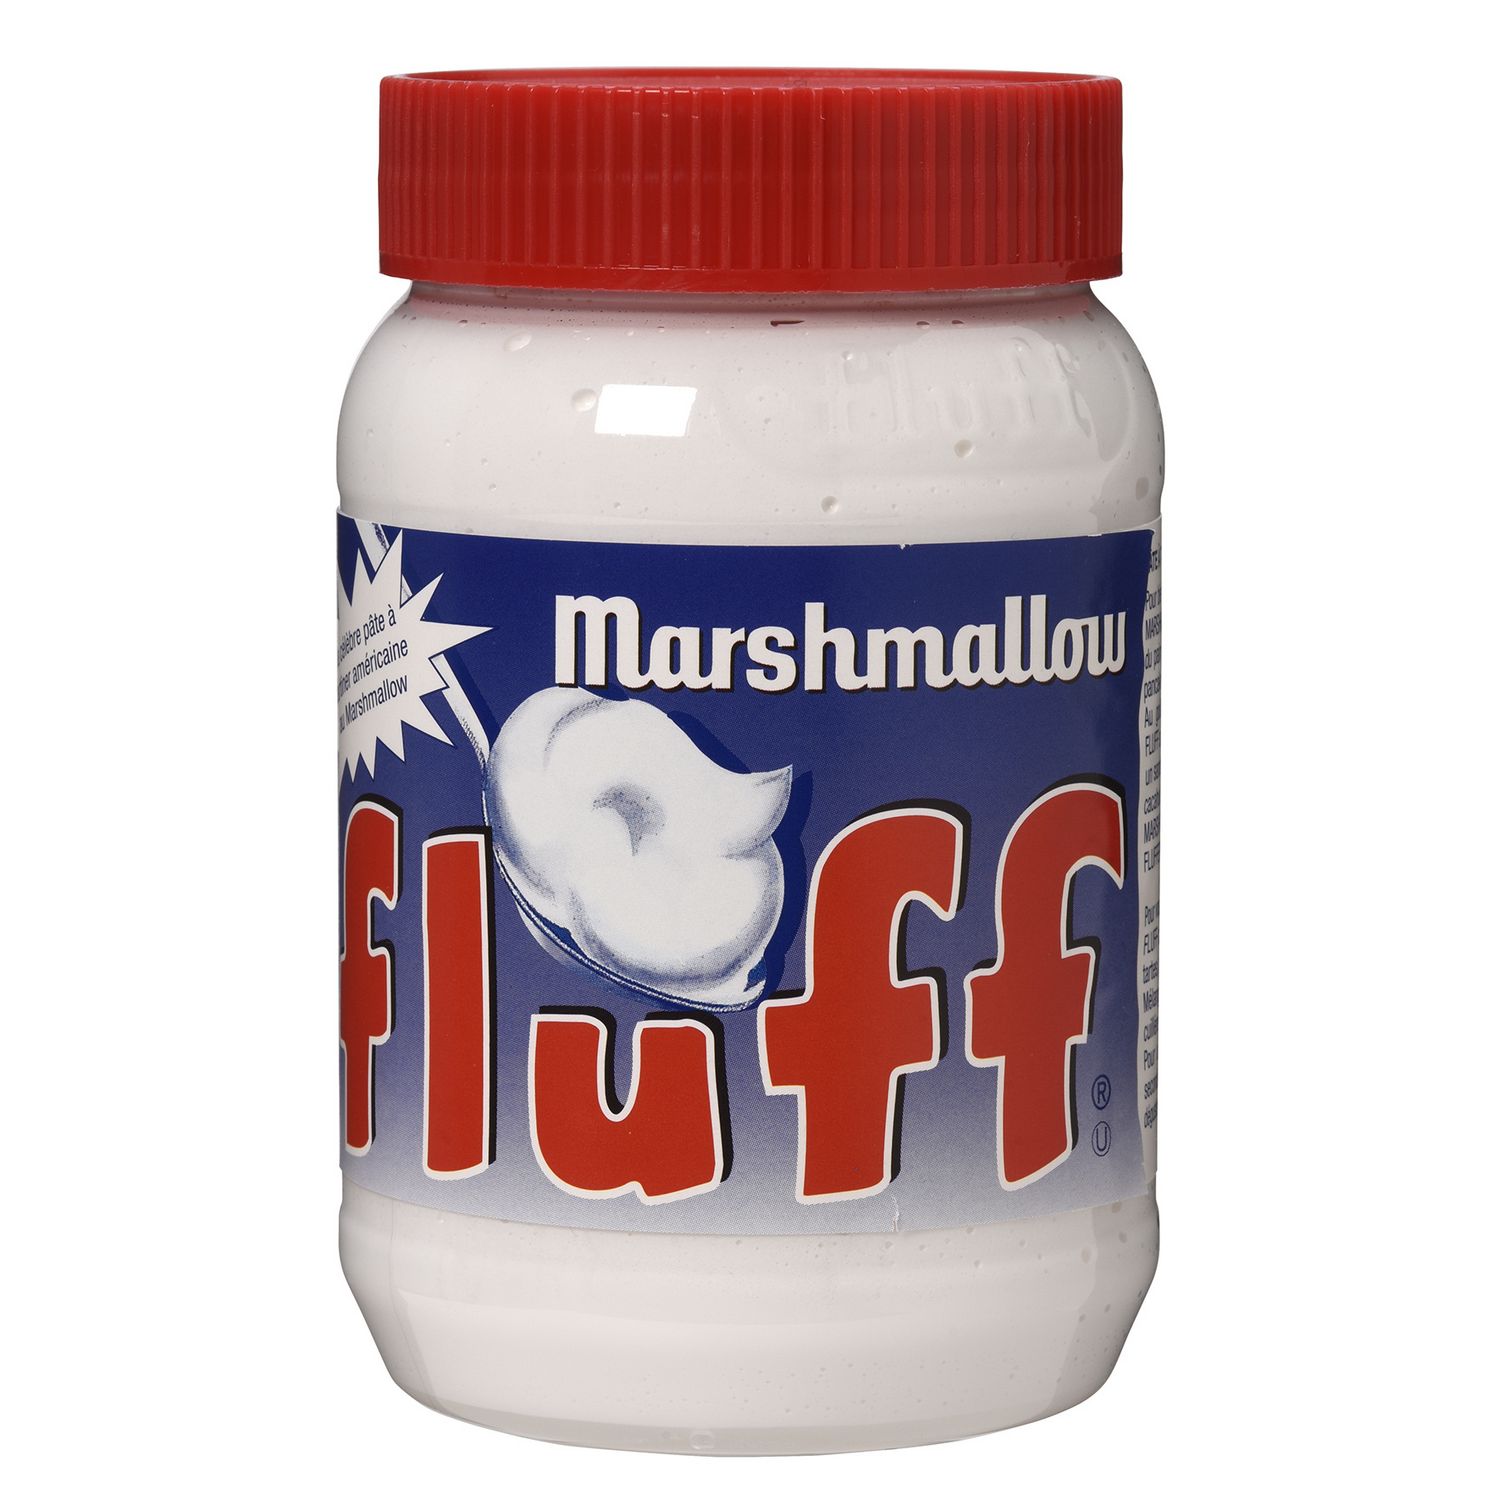 FLUFF Marshmallow vanille 213g pas cher 